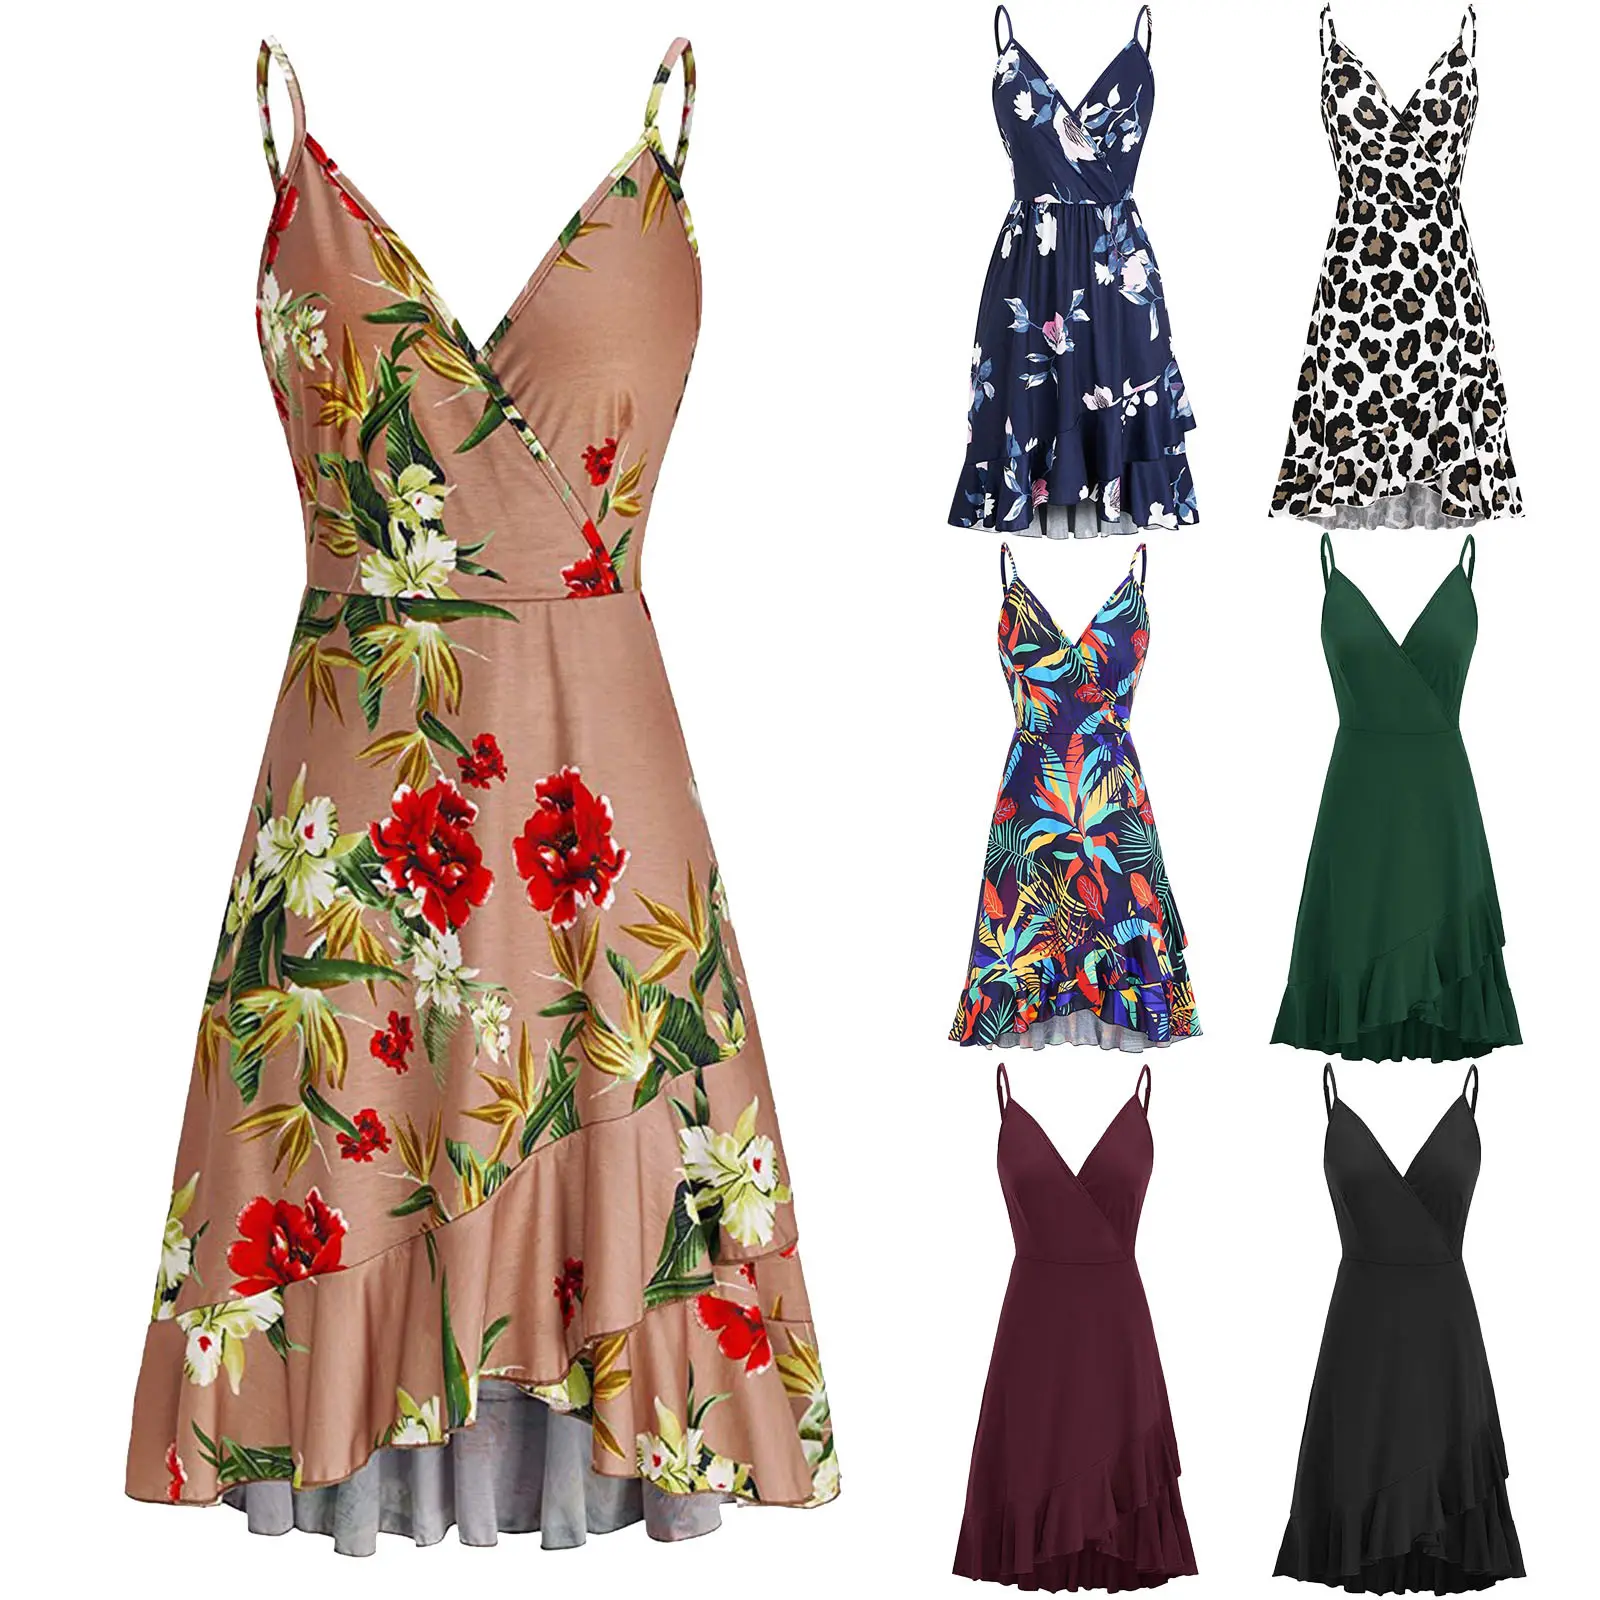 New 2021 Hot Summer Plus Size S-5XL Vestidos Women Casual Floral Print V-Neck Sleeveless Female Dress